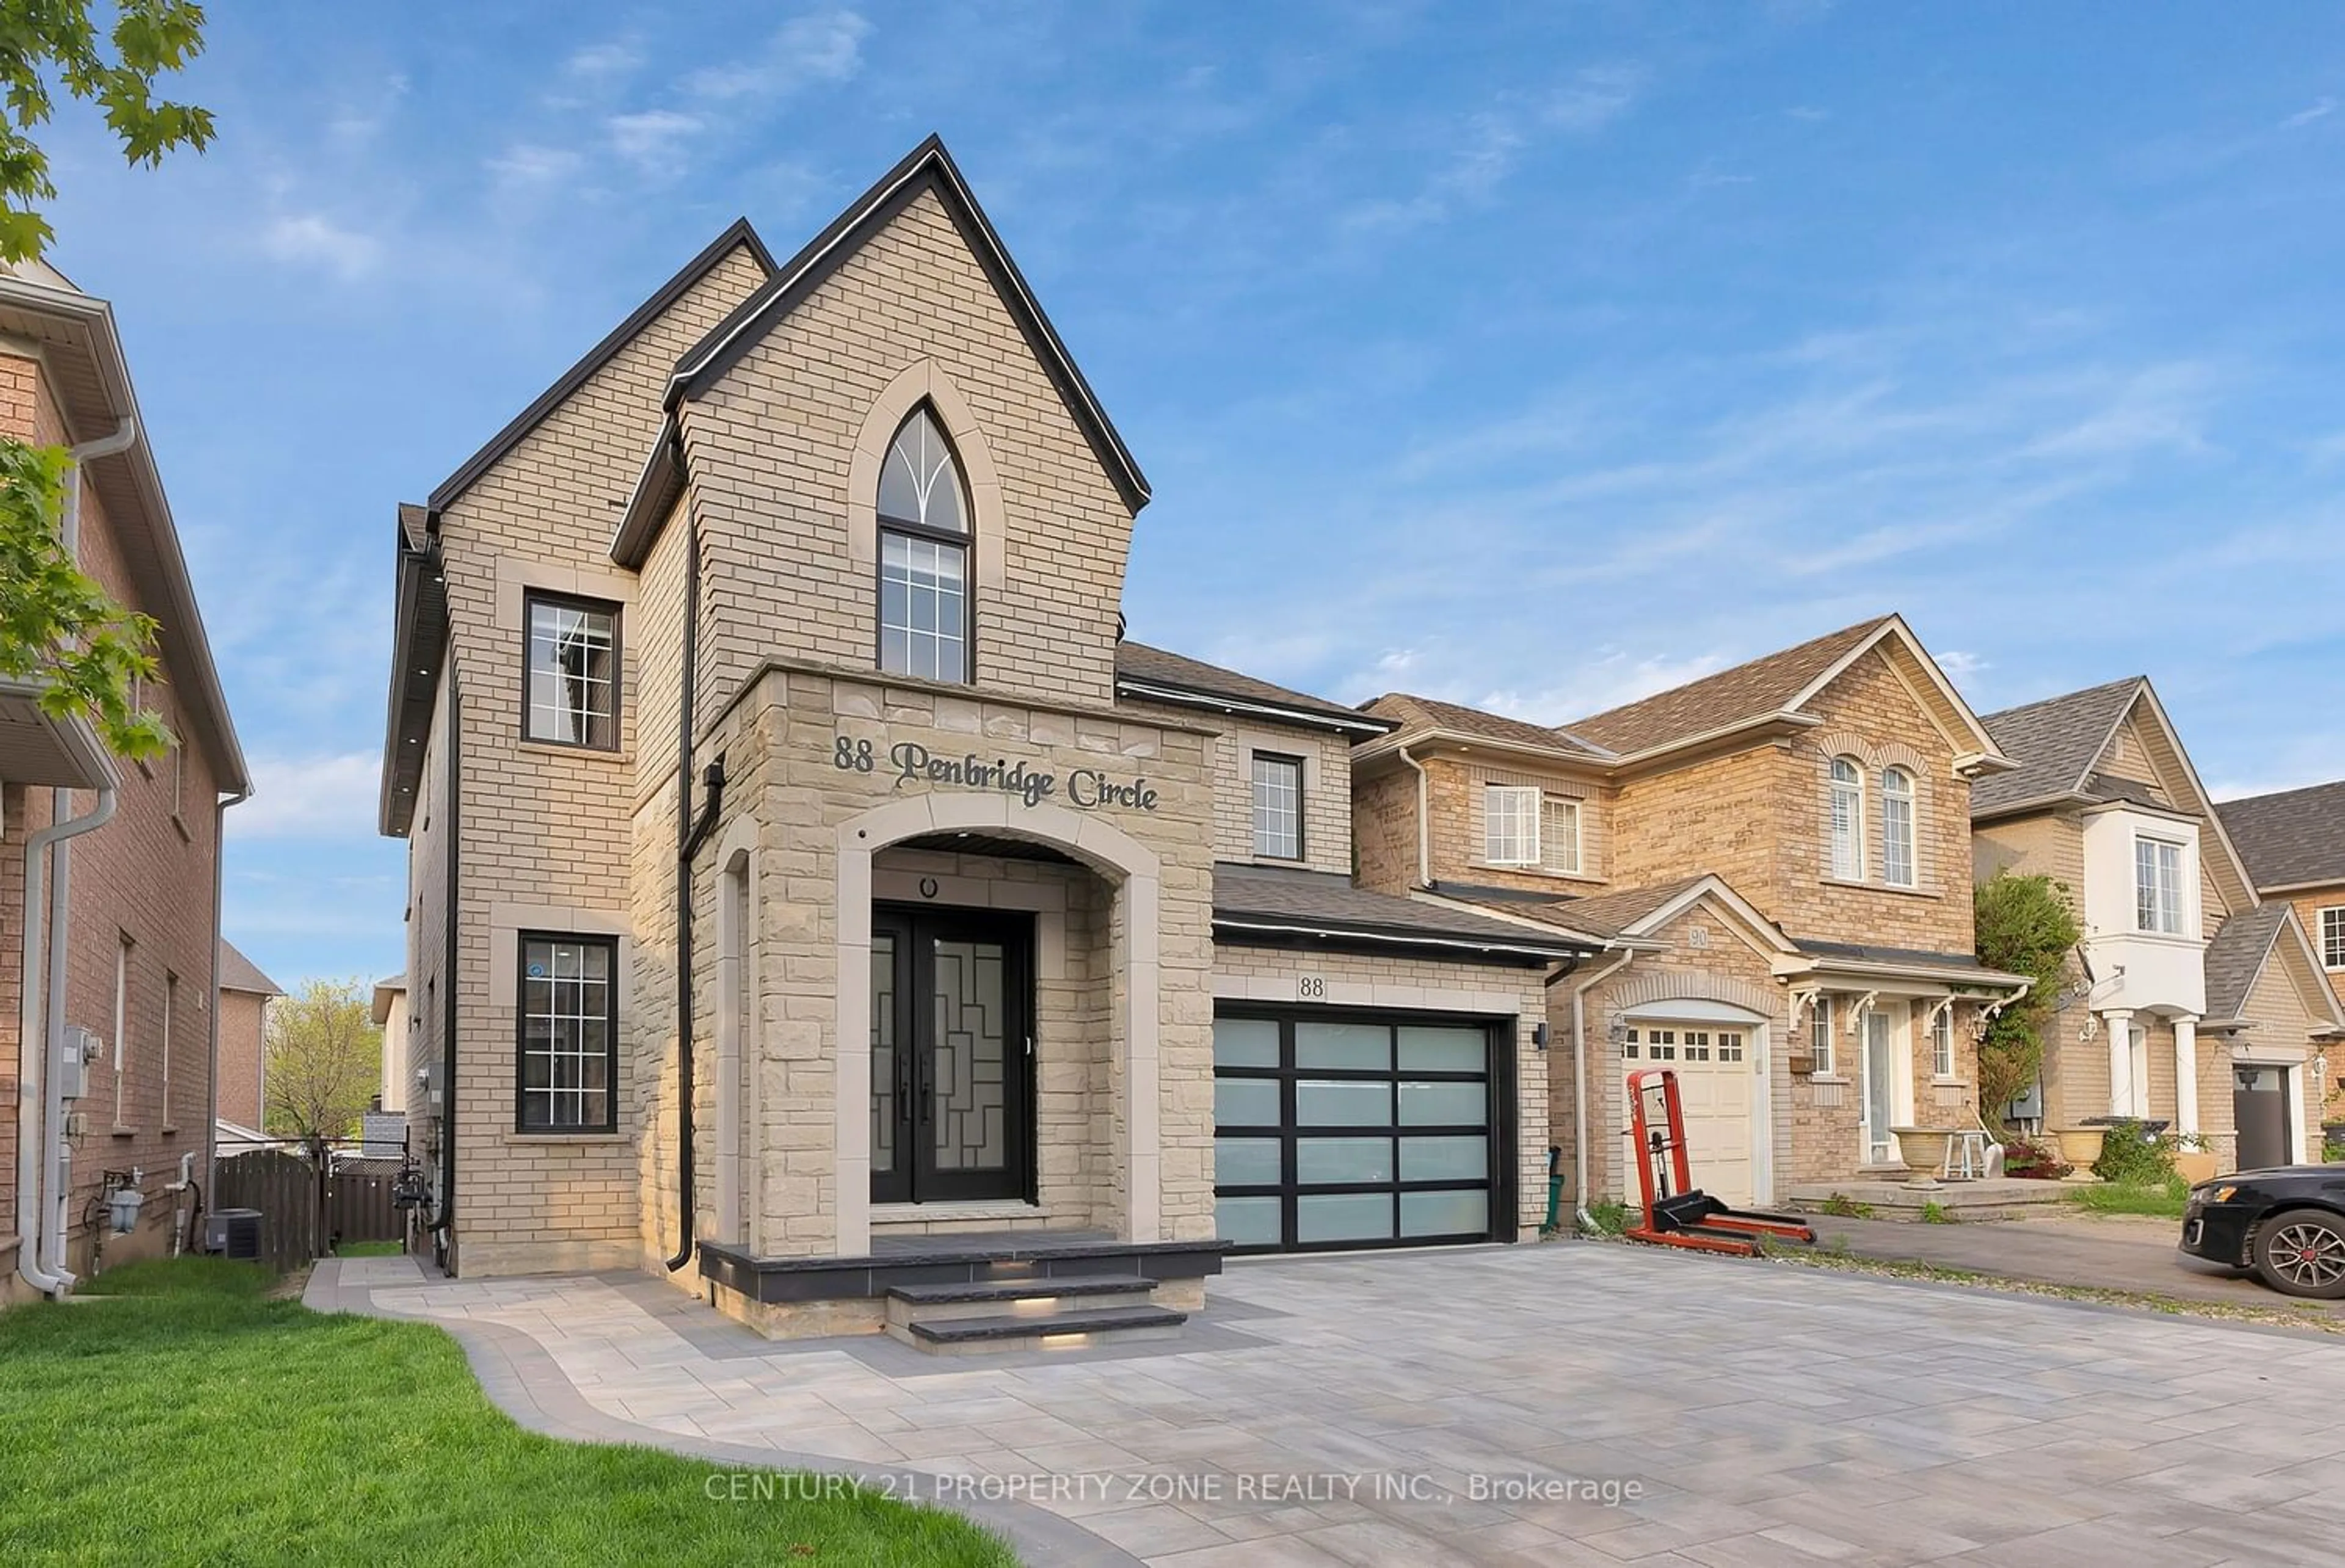 Home with brick exterior material for 88 Penbridge Circ, Brampton Ontario L7A 2R1